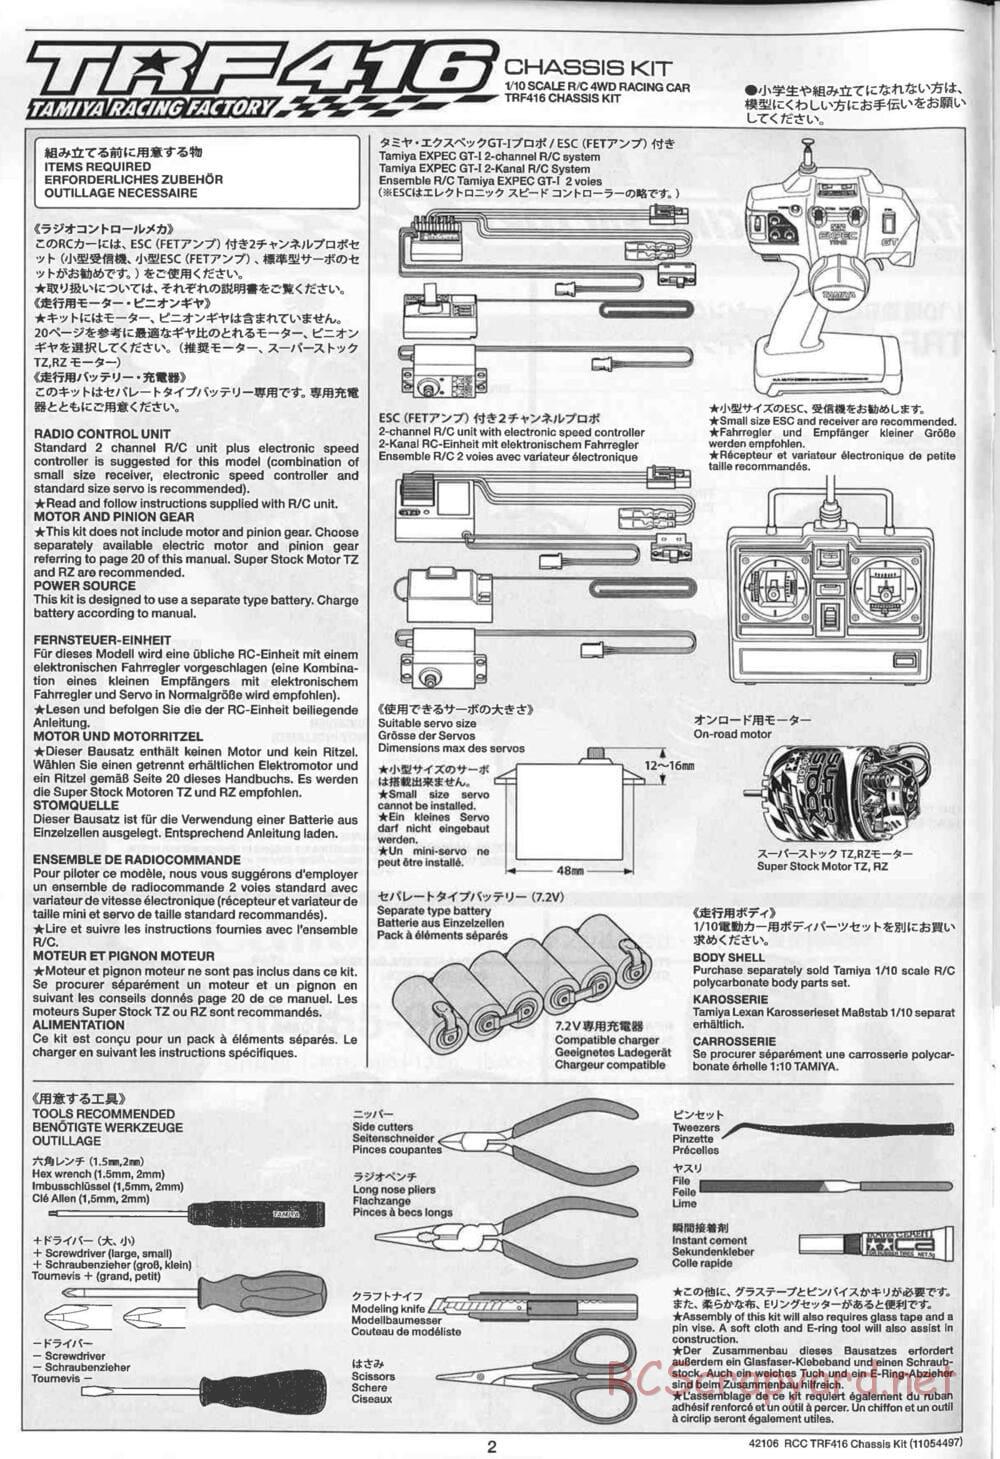 Tamiya - TRF416 Chassis - Manual - Page 2